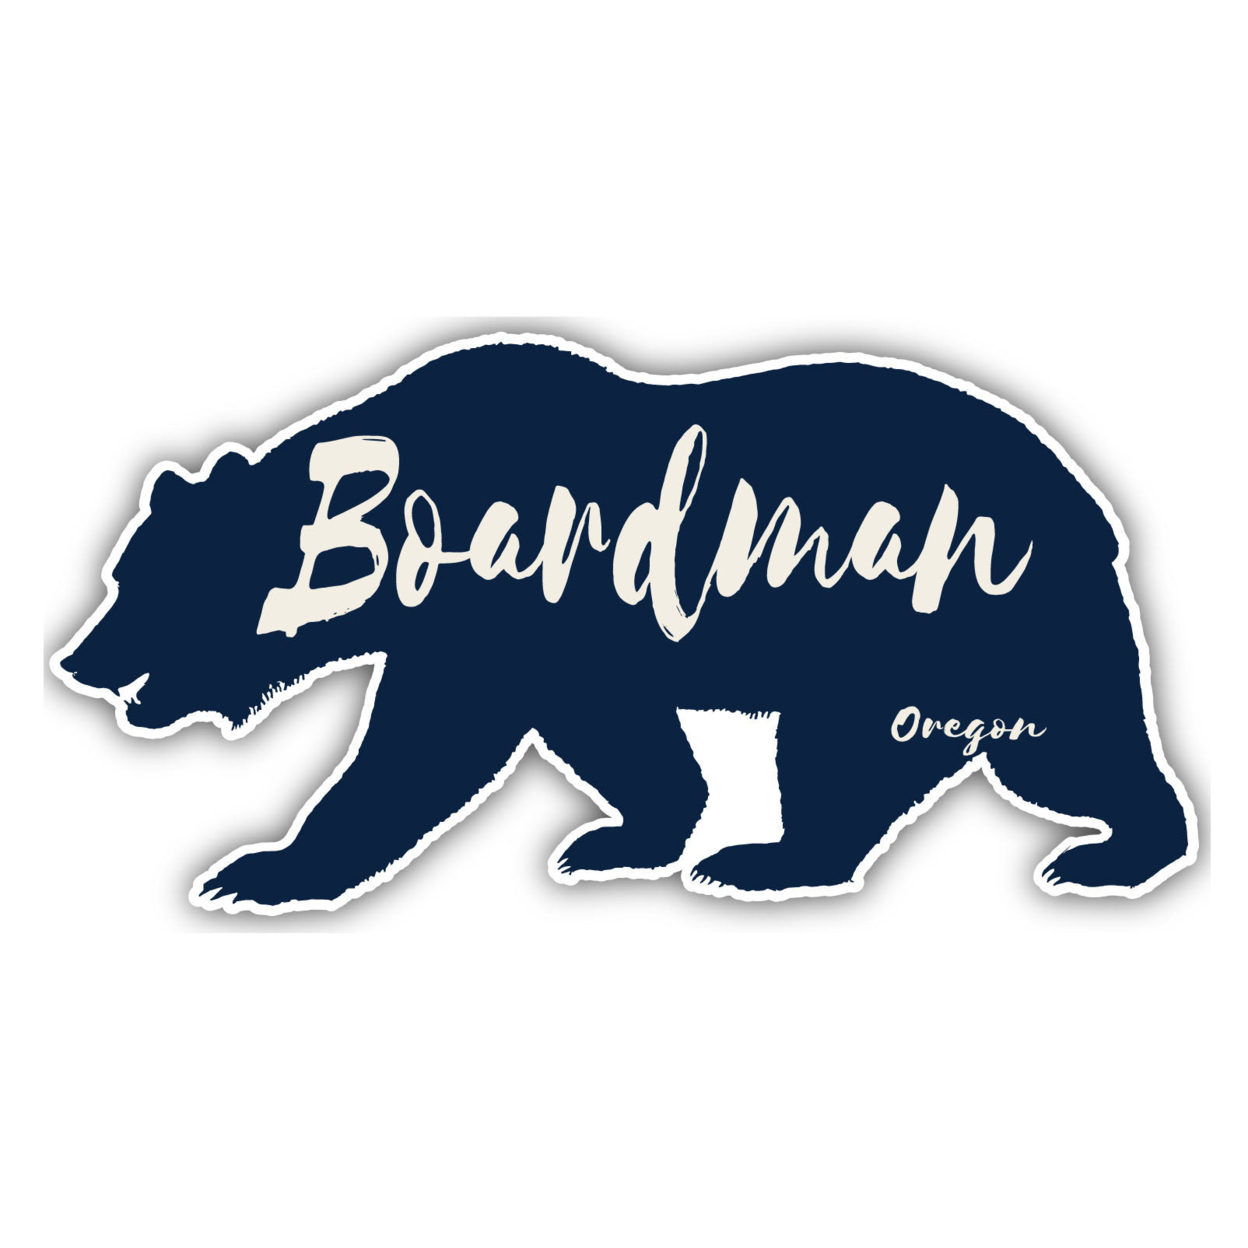 Boardman Oregon Souvenir Decorative Stickers (Choose Theme And Size) - 4-Pack, 10-Inch, Camp Life